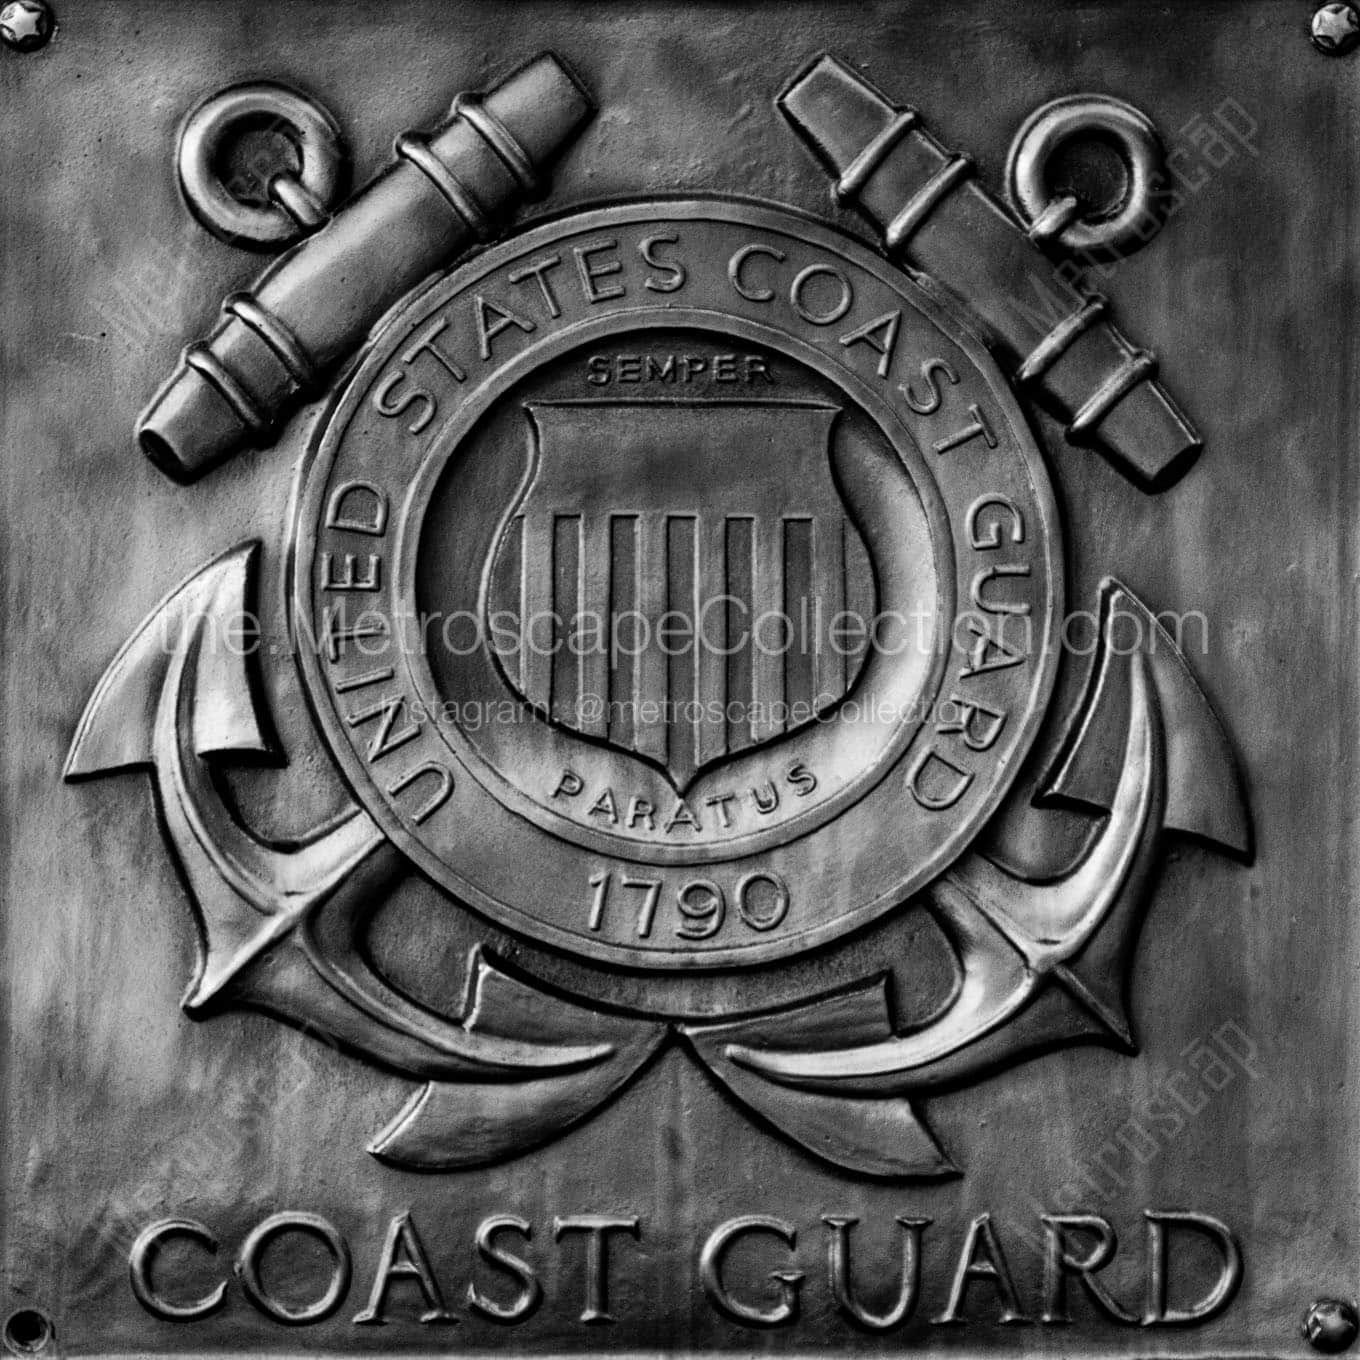 us coast guard bronze plaque Black & White Office Art